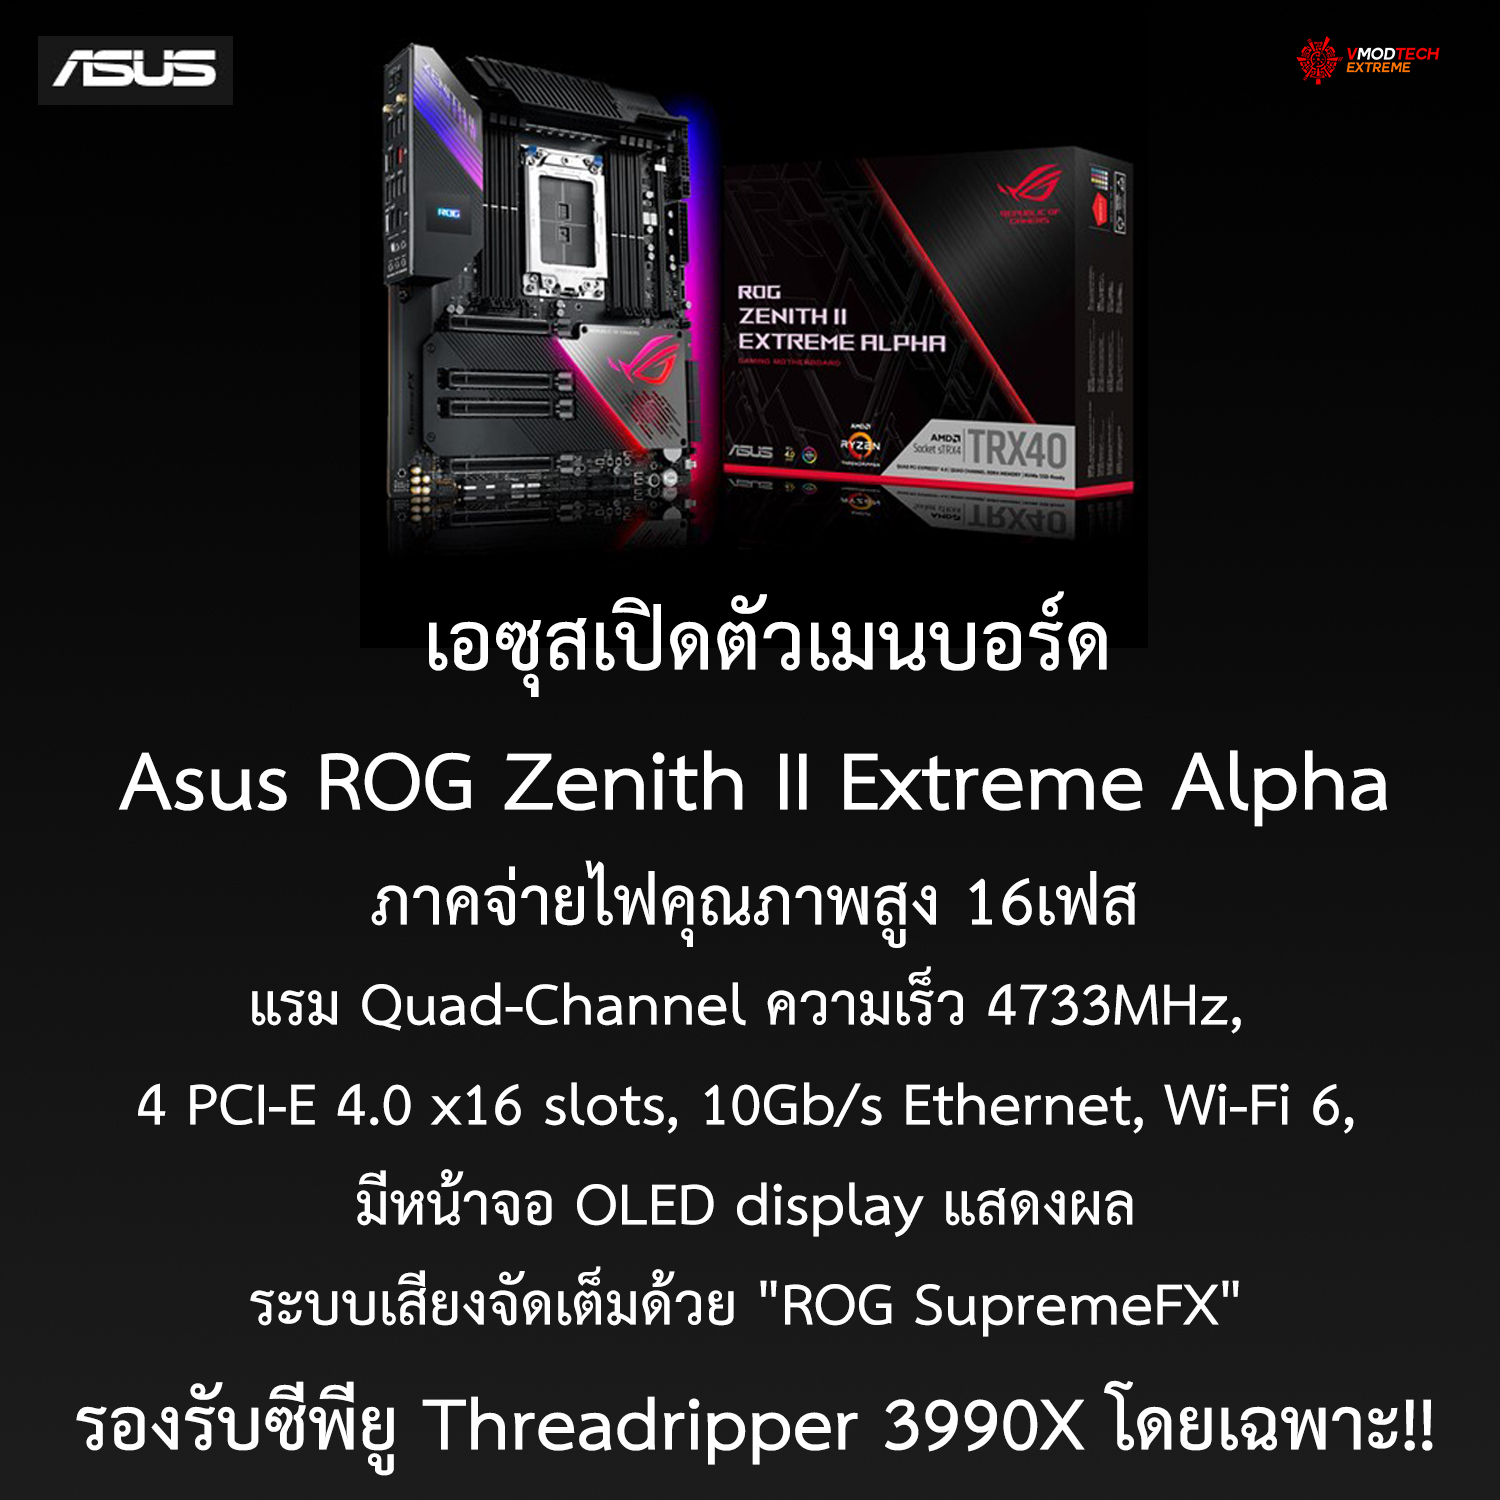 rog zenith ii extreme alpha เอซุสเปิดตัว Asus ROG Zenith II Extreme Alpha ที่ออกแบบมารองรับซีพียูรุ่นท็อปสุดอย่าง Threadripper 3990X โดยเฉพาะ!!